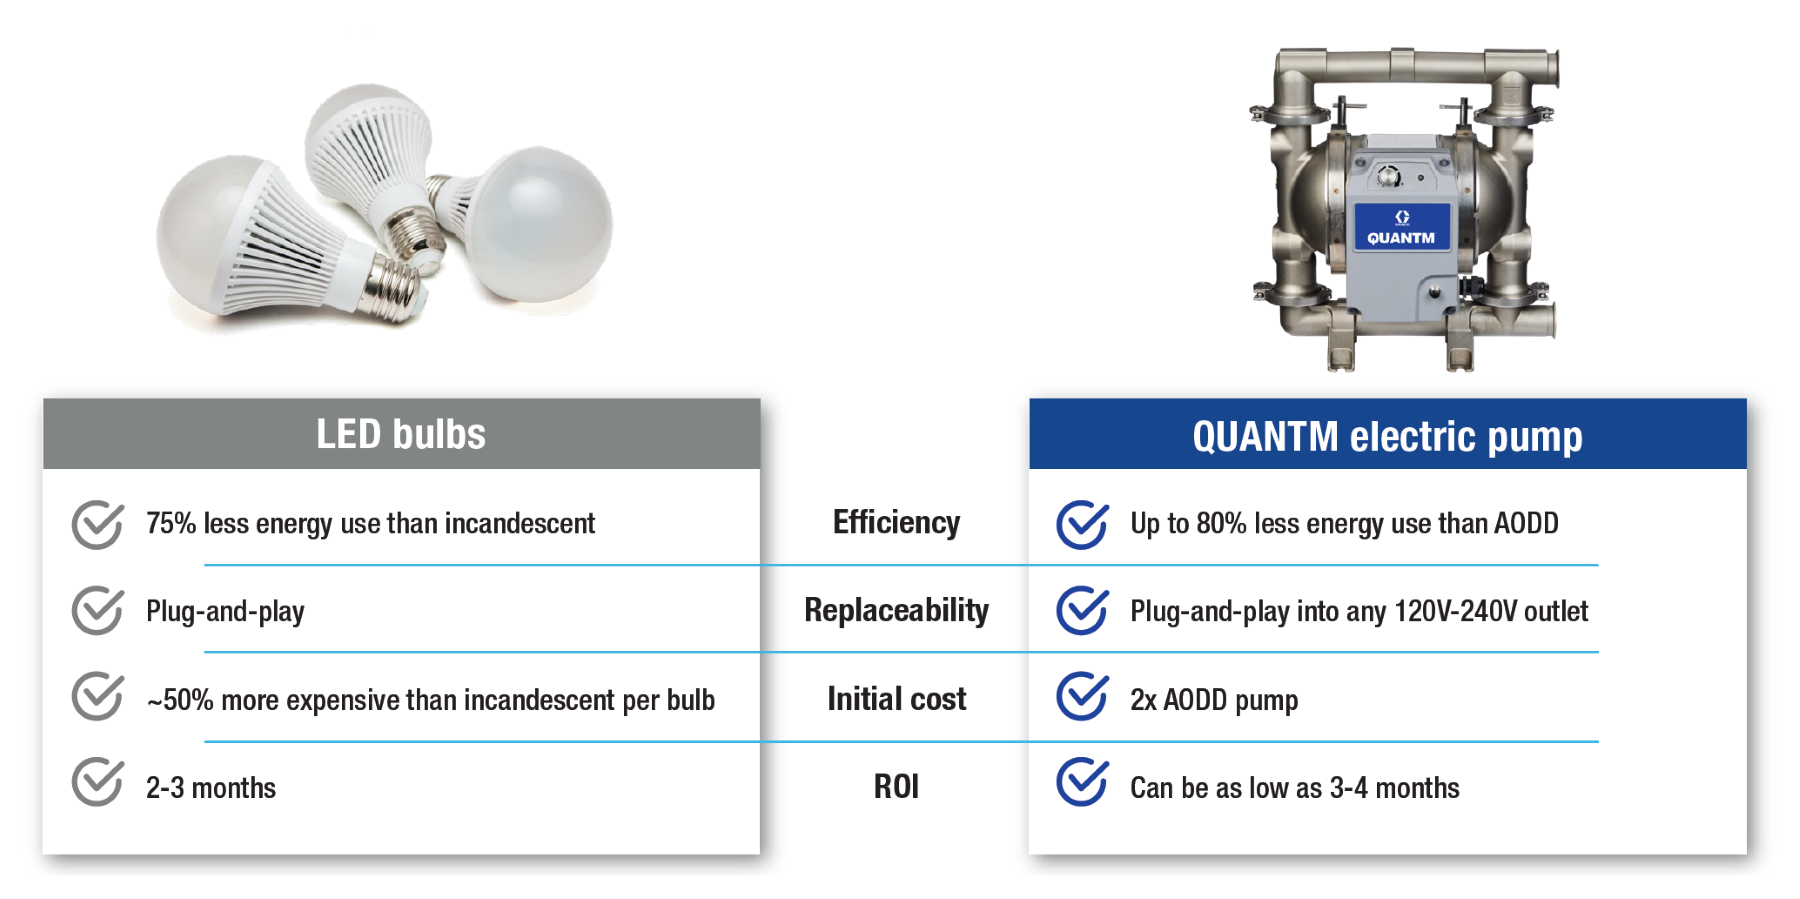 LED bulbs vs QUANTM electric pump by Graco